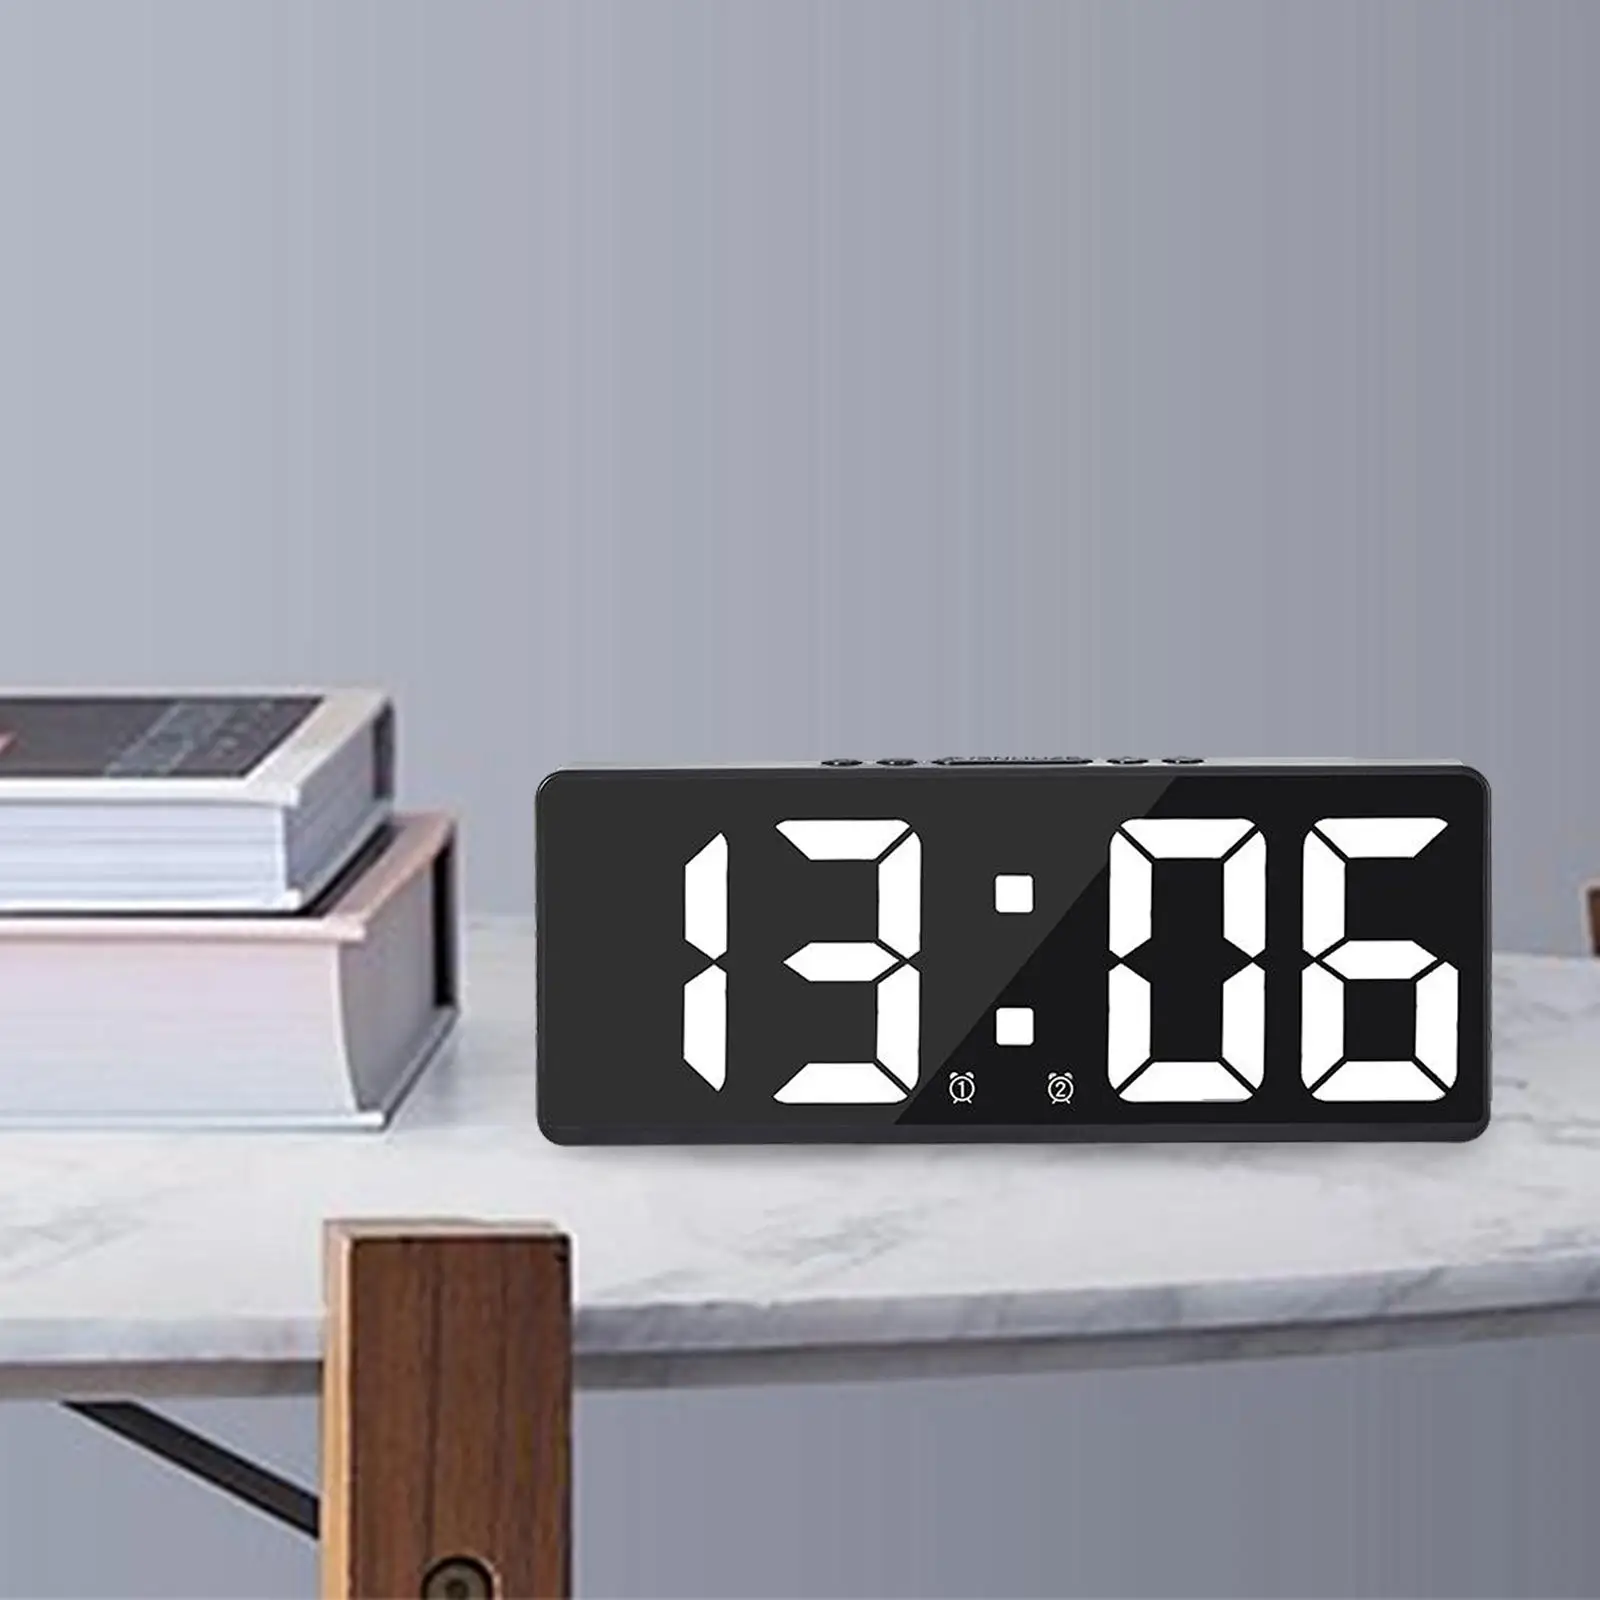 Large Number Alarm Clock USB Charger Large LED Display Desktop Voice Control for